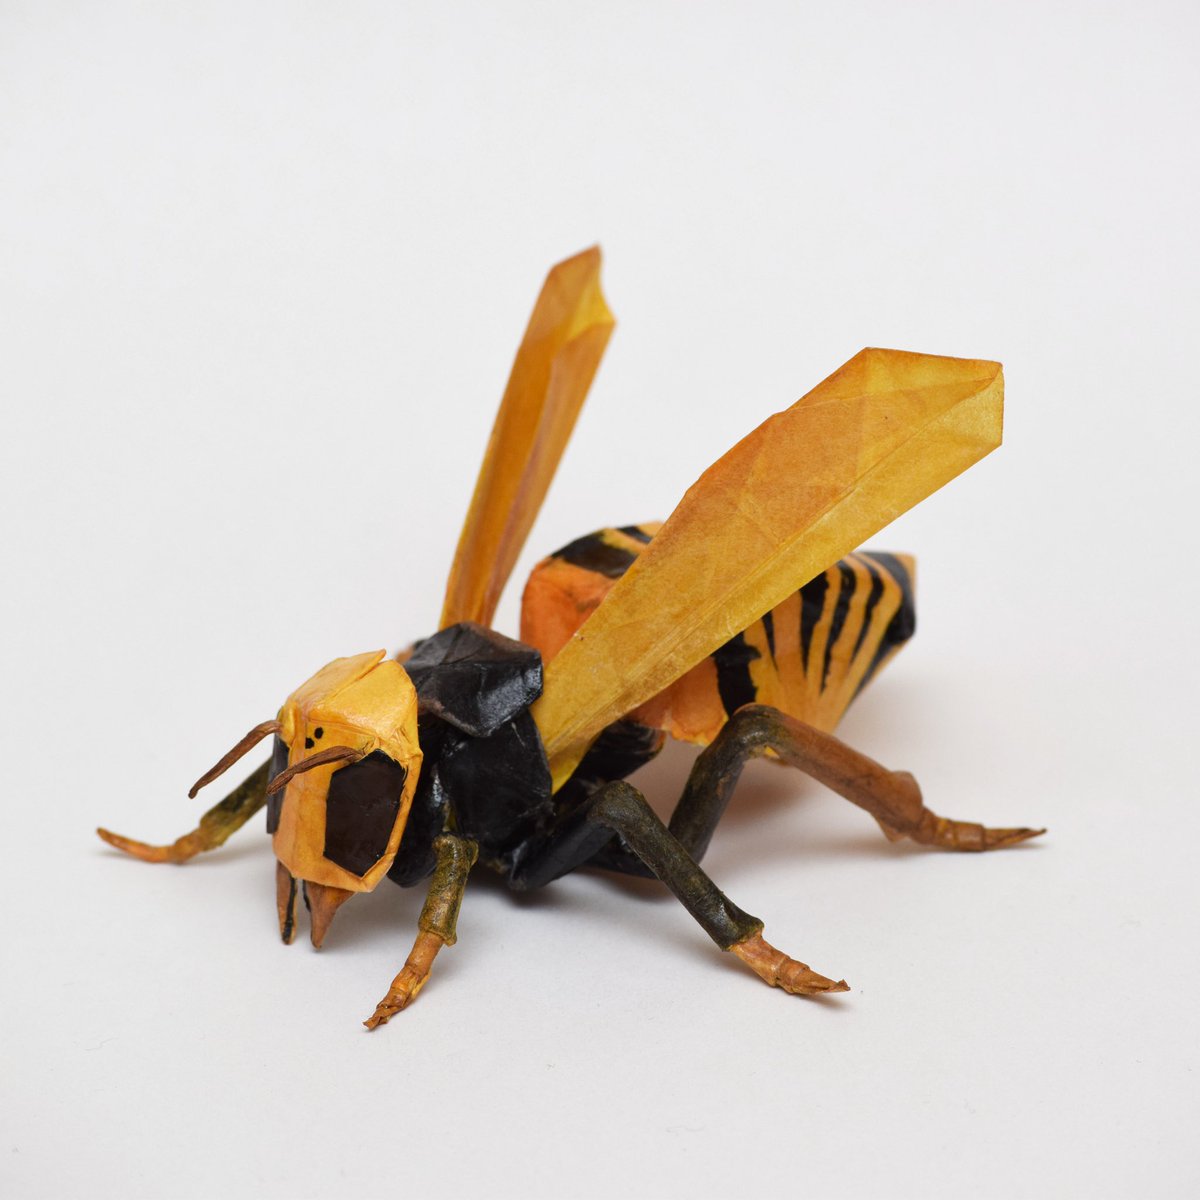 Kal スズメバチ Wasp 不切正方形一枚折り 折り上げた後に塗装とコーティングをしています 翅に蝋引き加工を施してみました 初めての昆虫創作 折り紙 折り紙作品 Origami T Co Crtqs7anfl Twitter